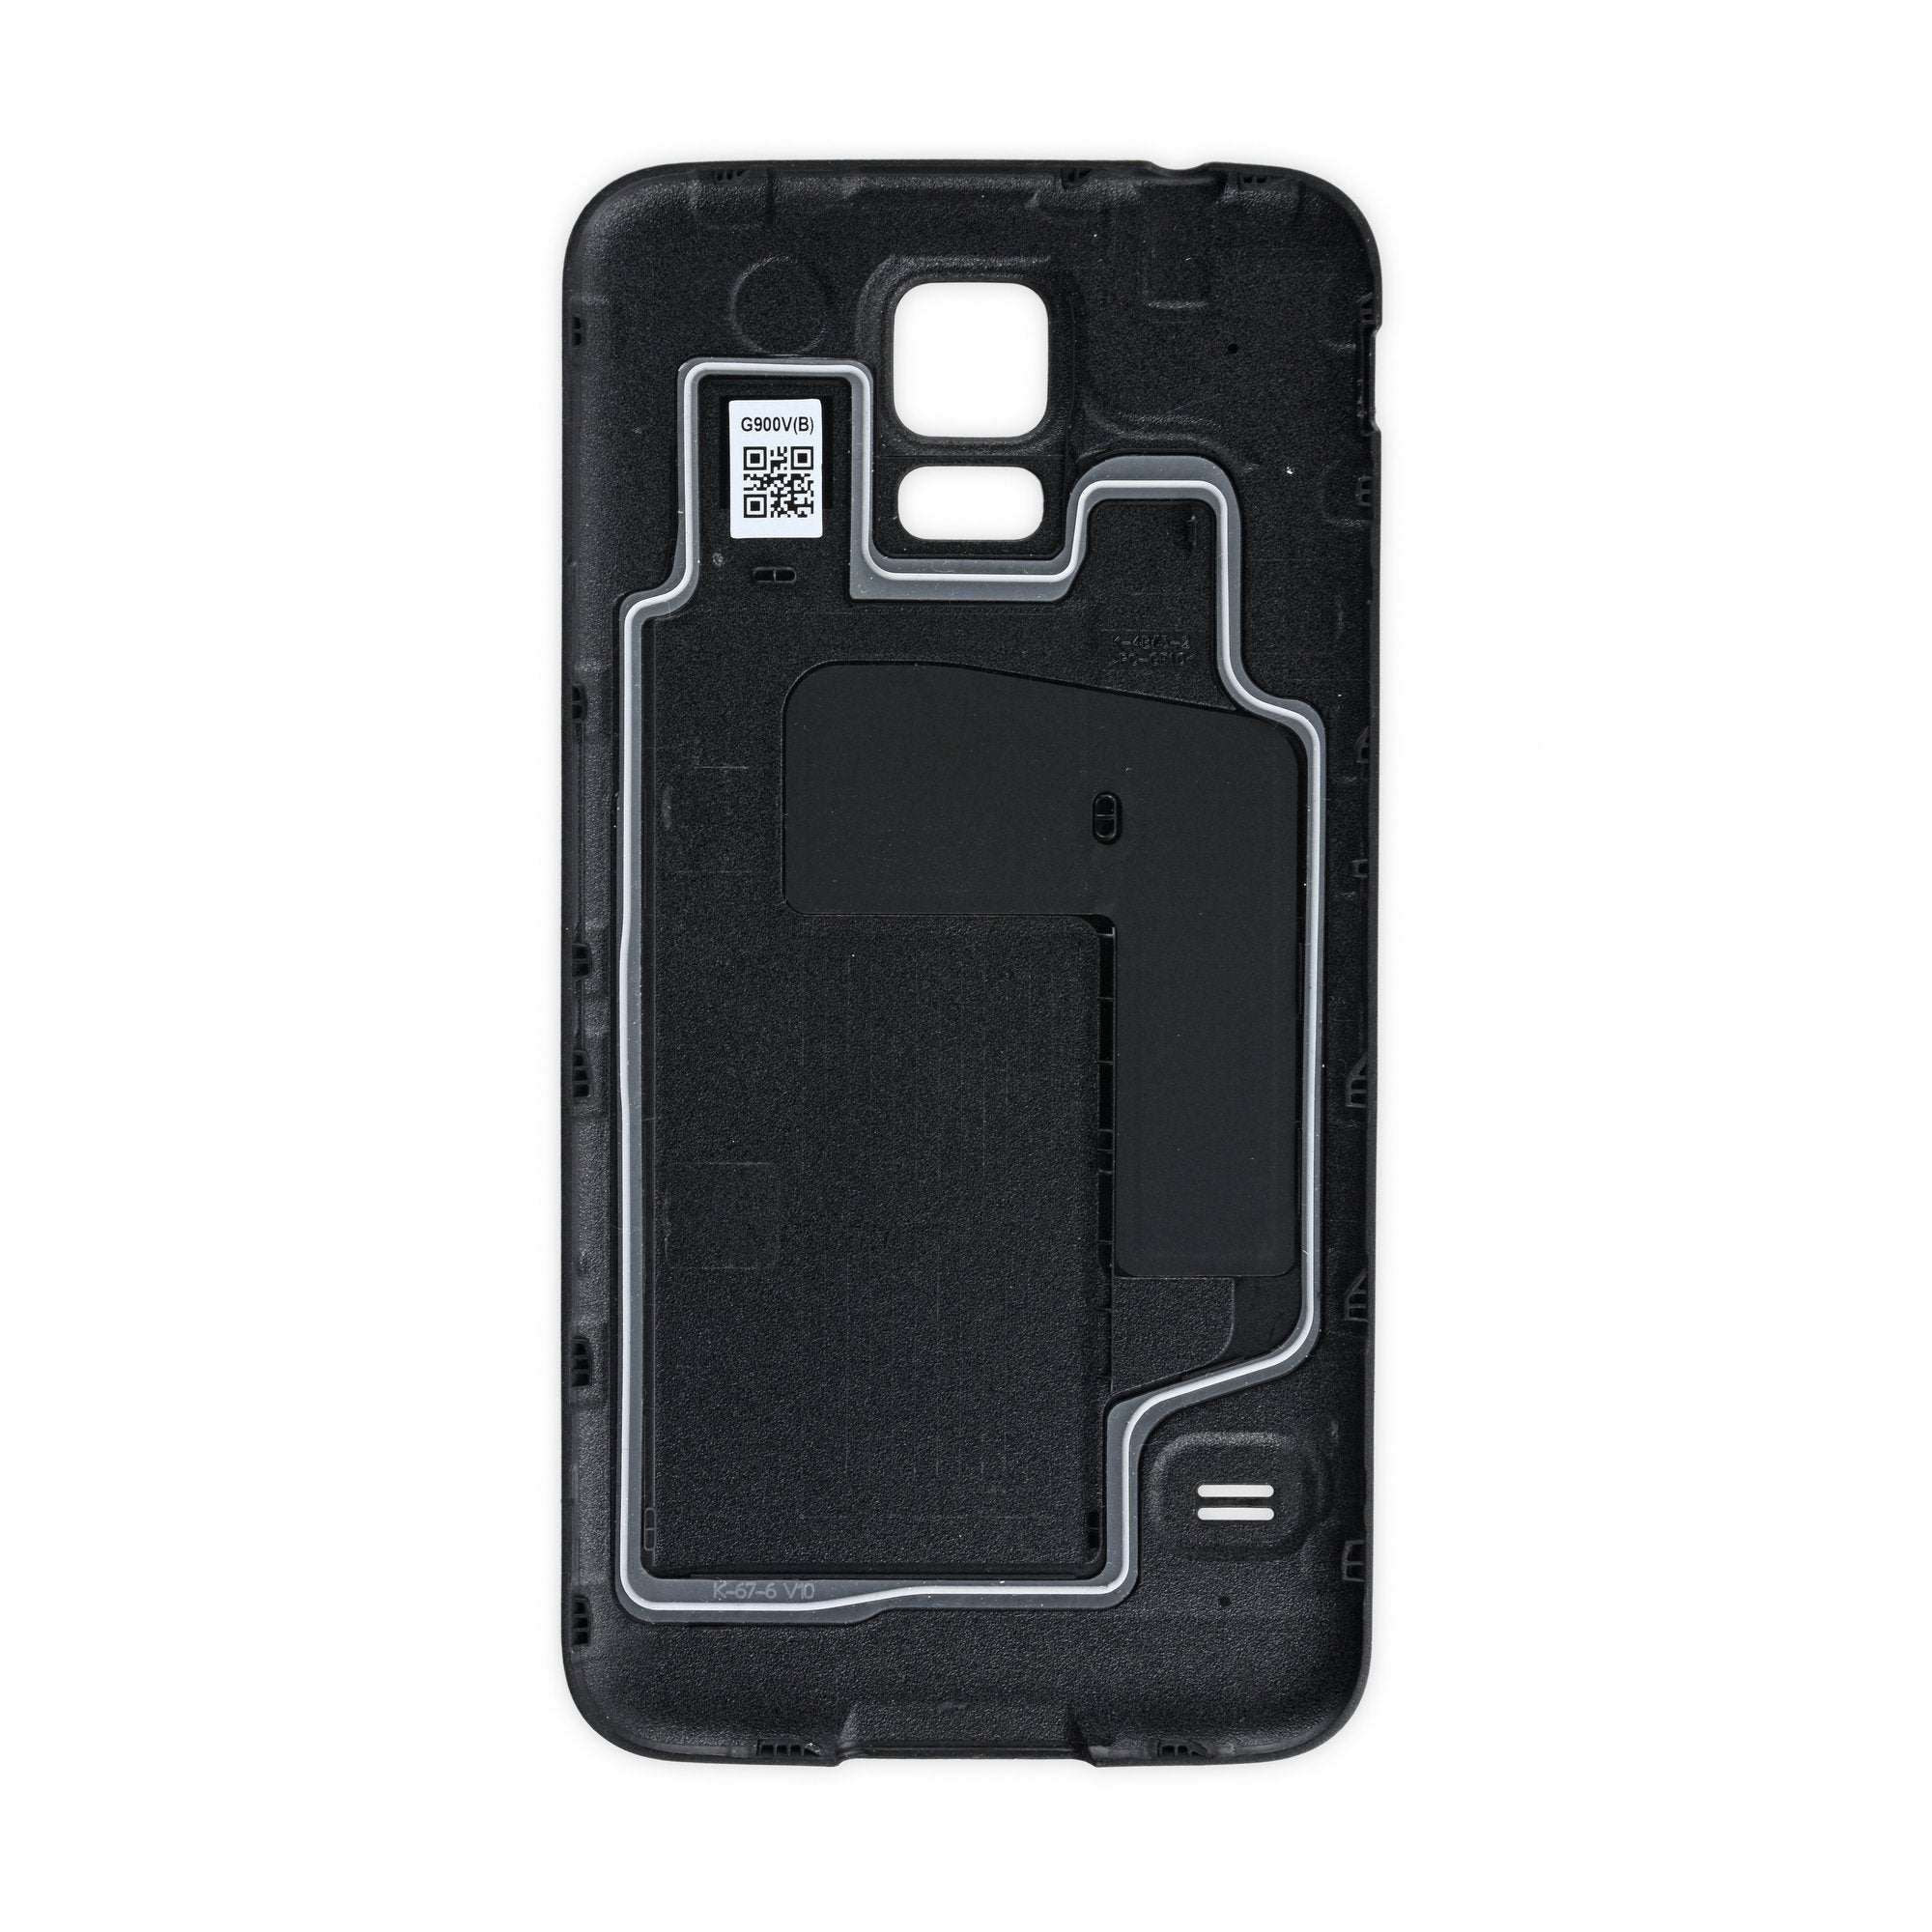 Galaxy S5 Rear Panel (Verizon) Black Used, A-Stock